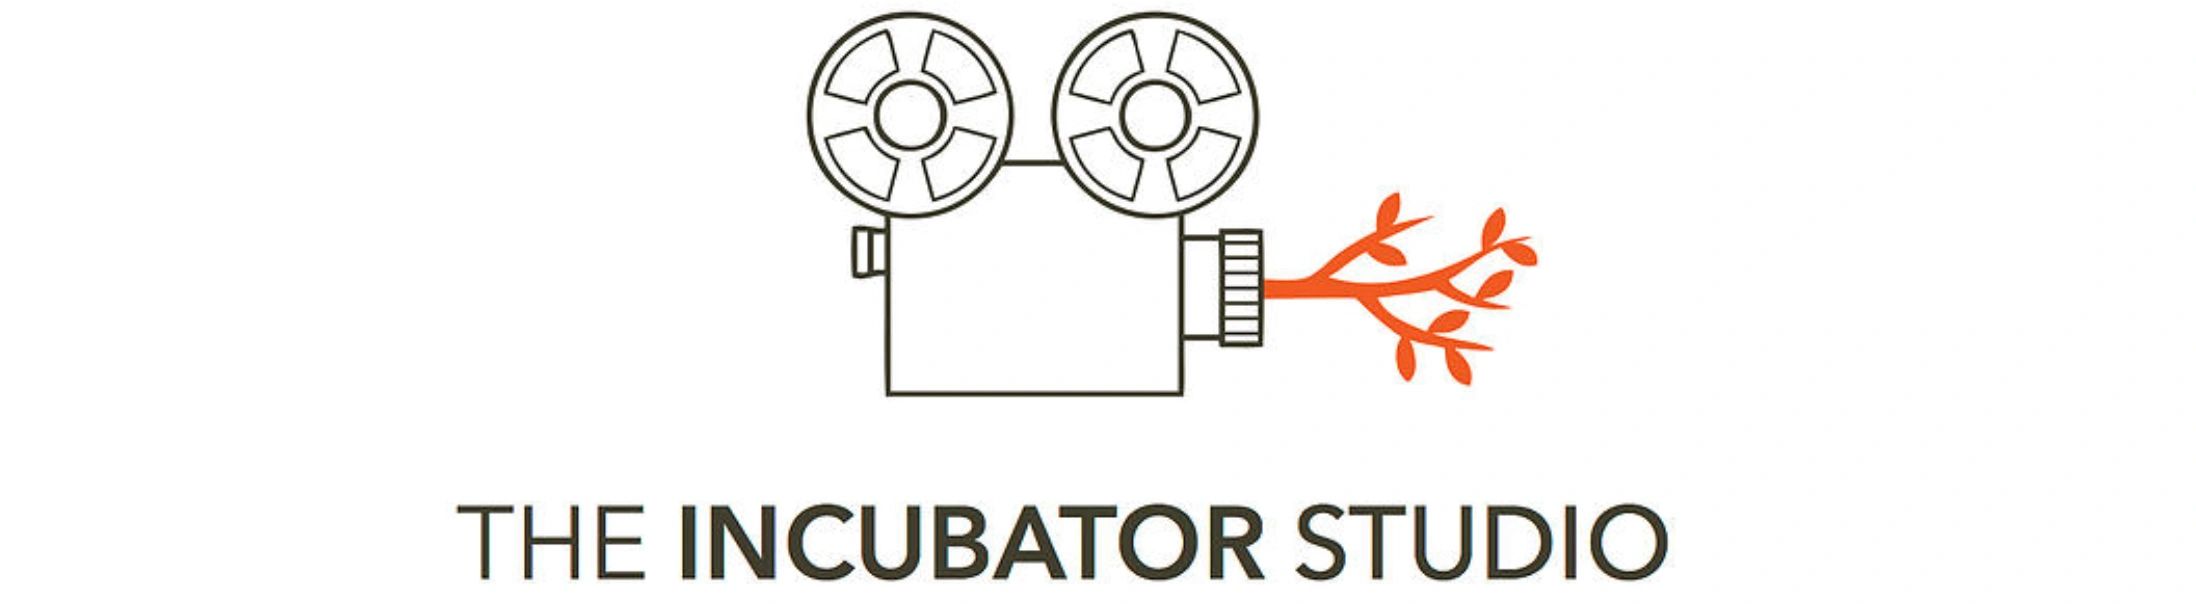 The Incubator Studio